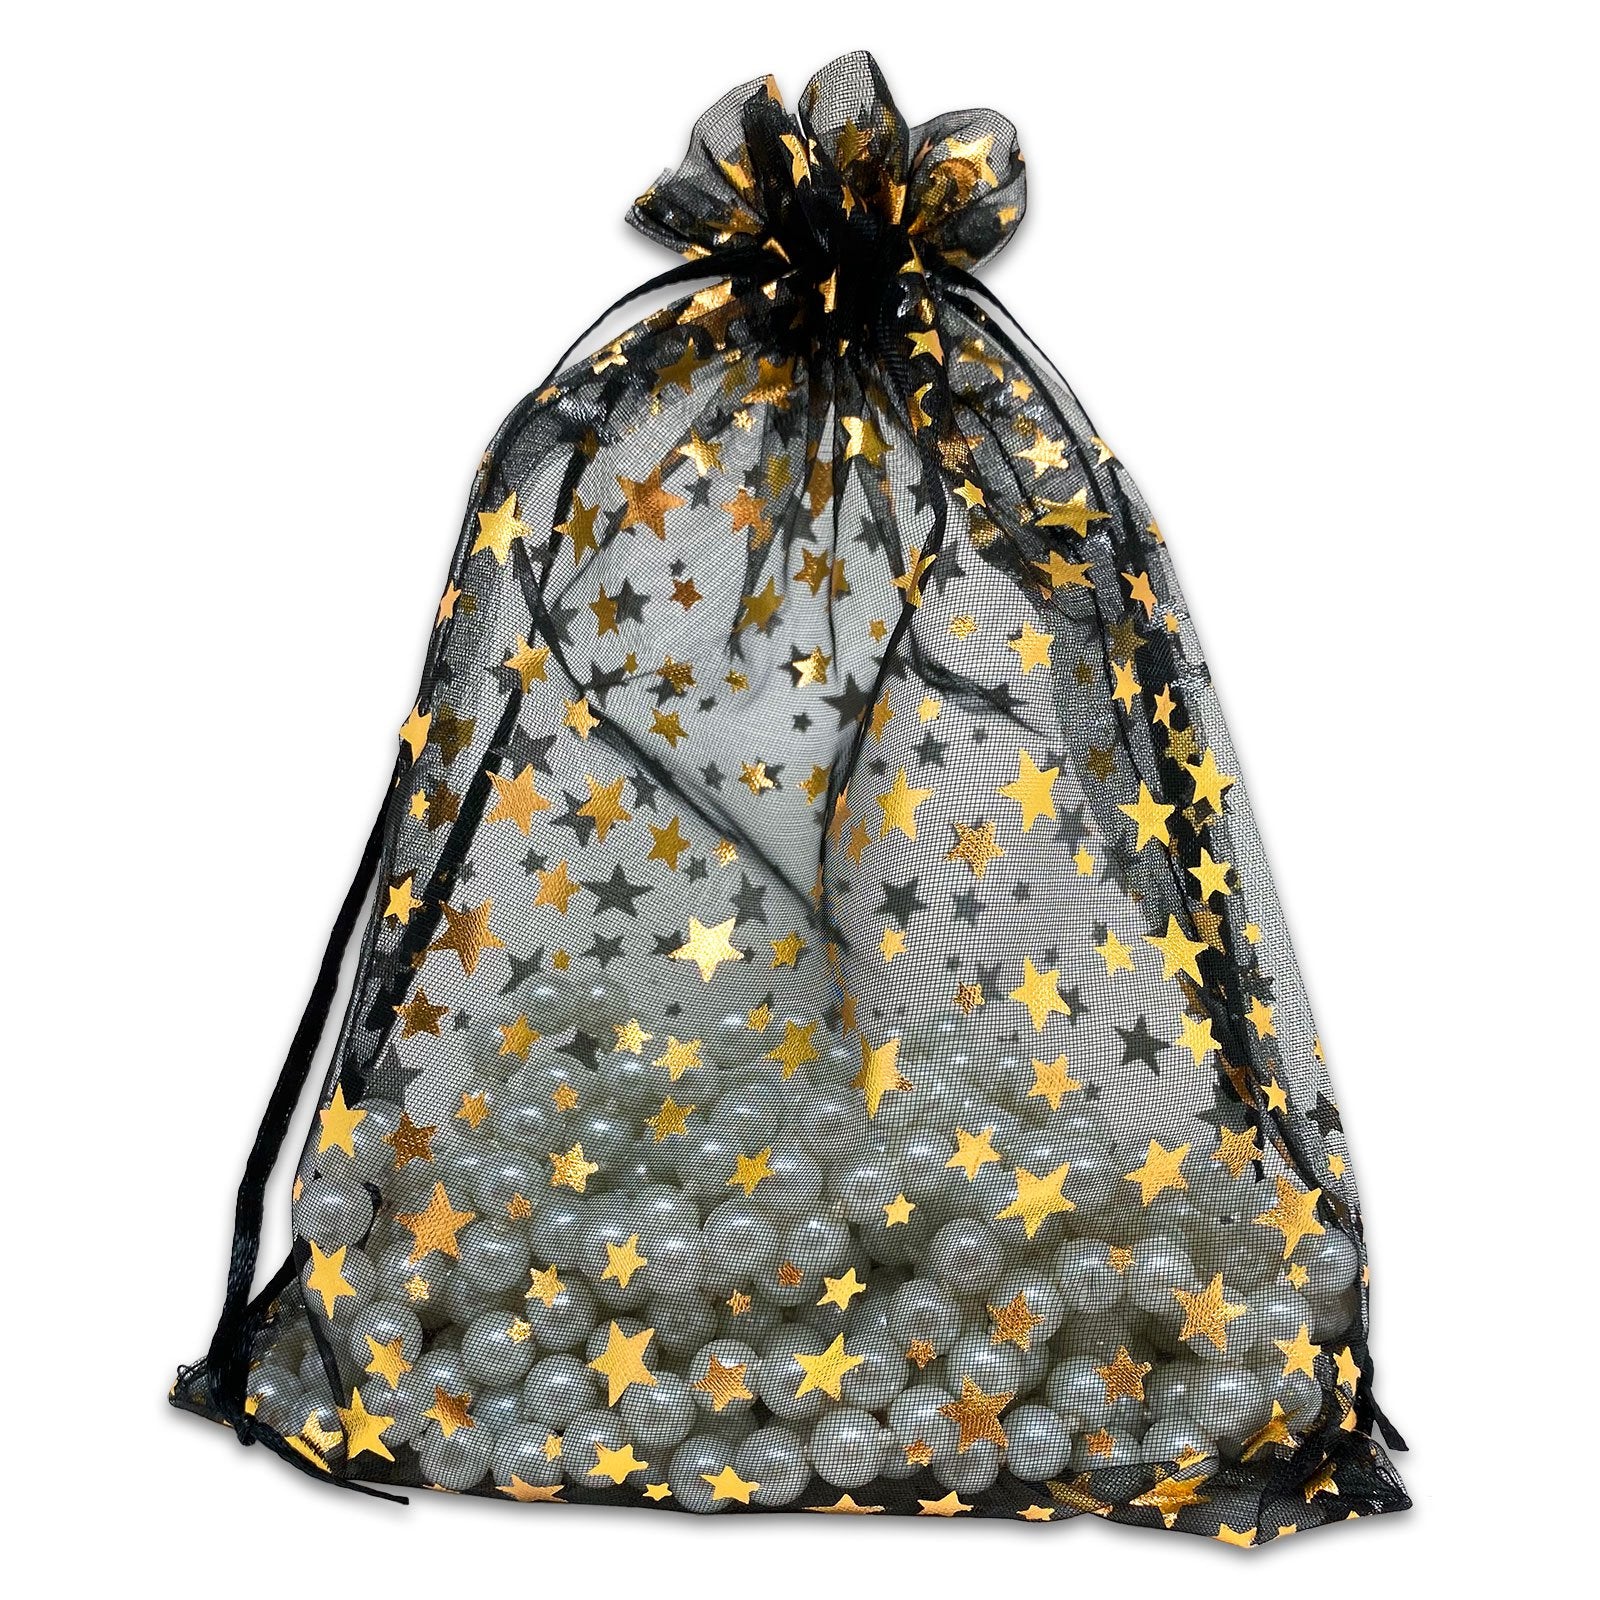 Black Gold Box Bag Purse Stars / Beaded / Zipper Closure / 